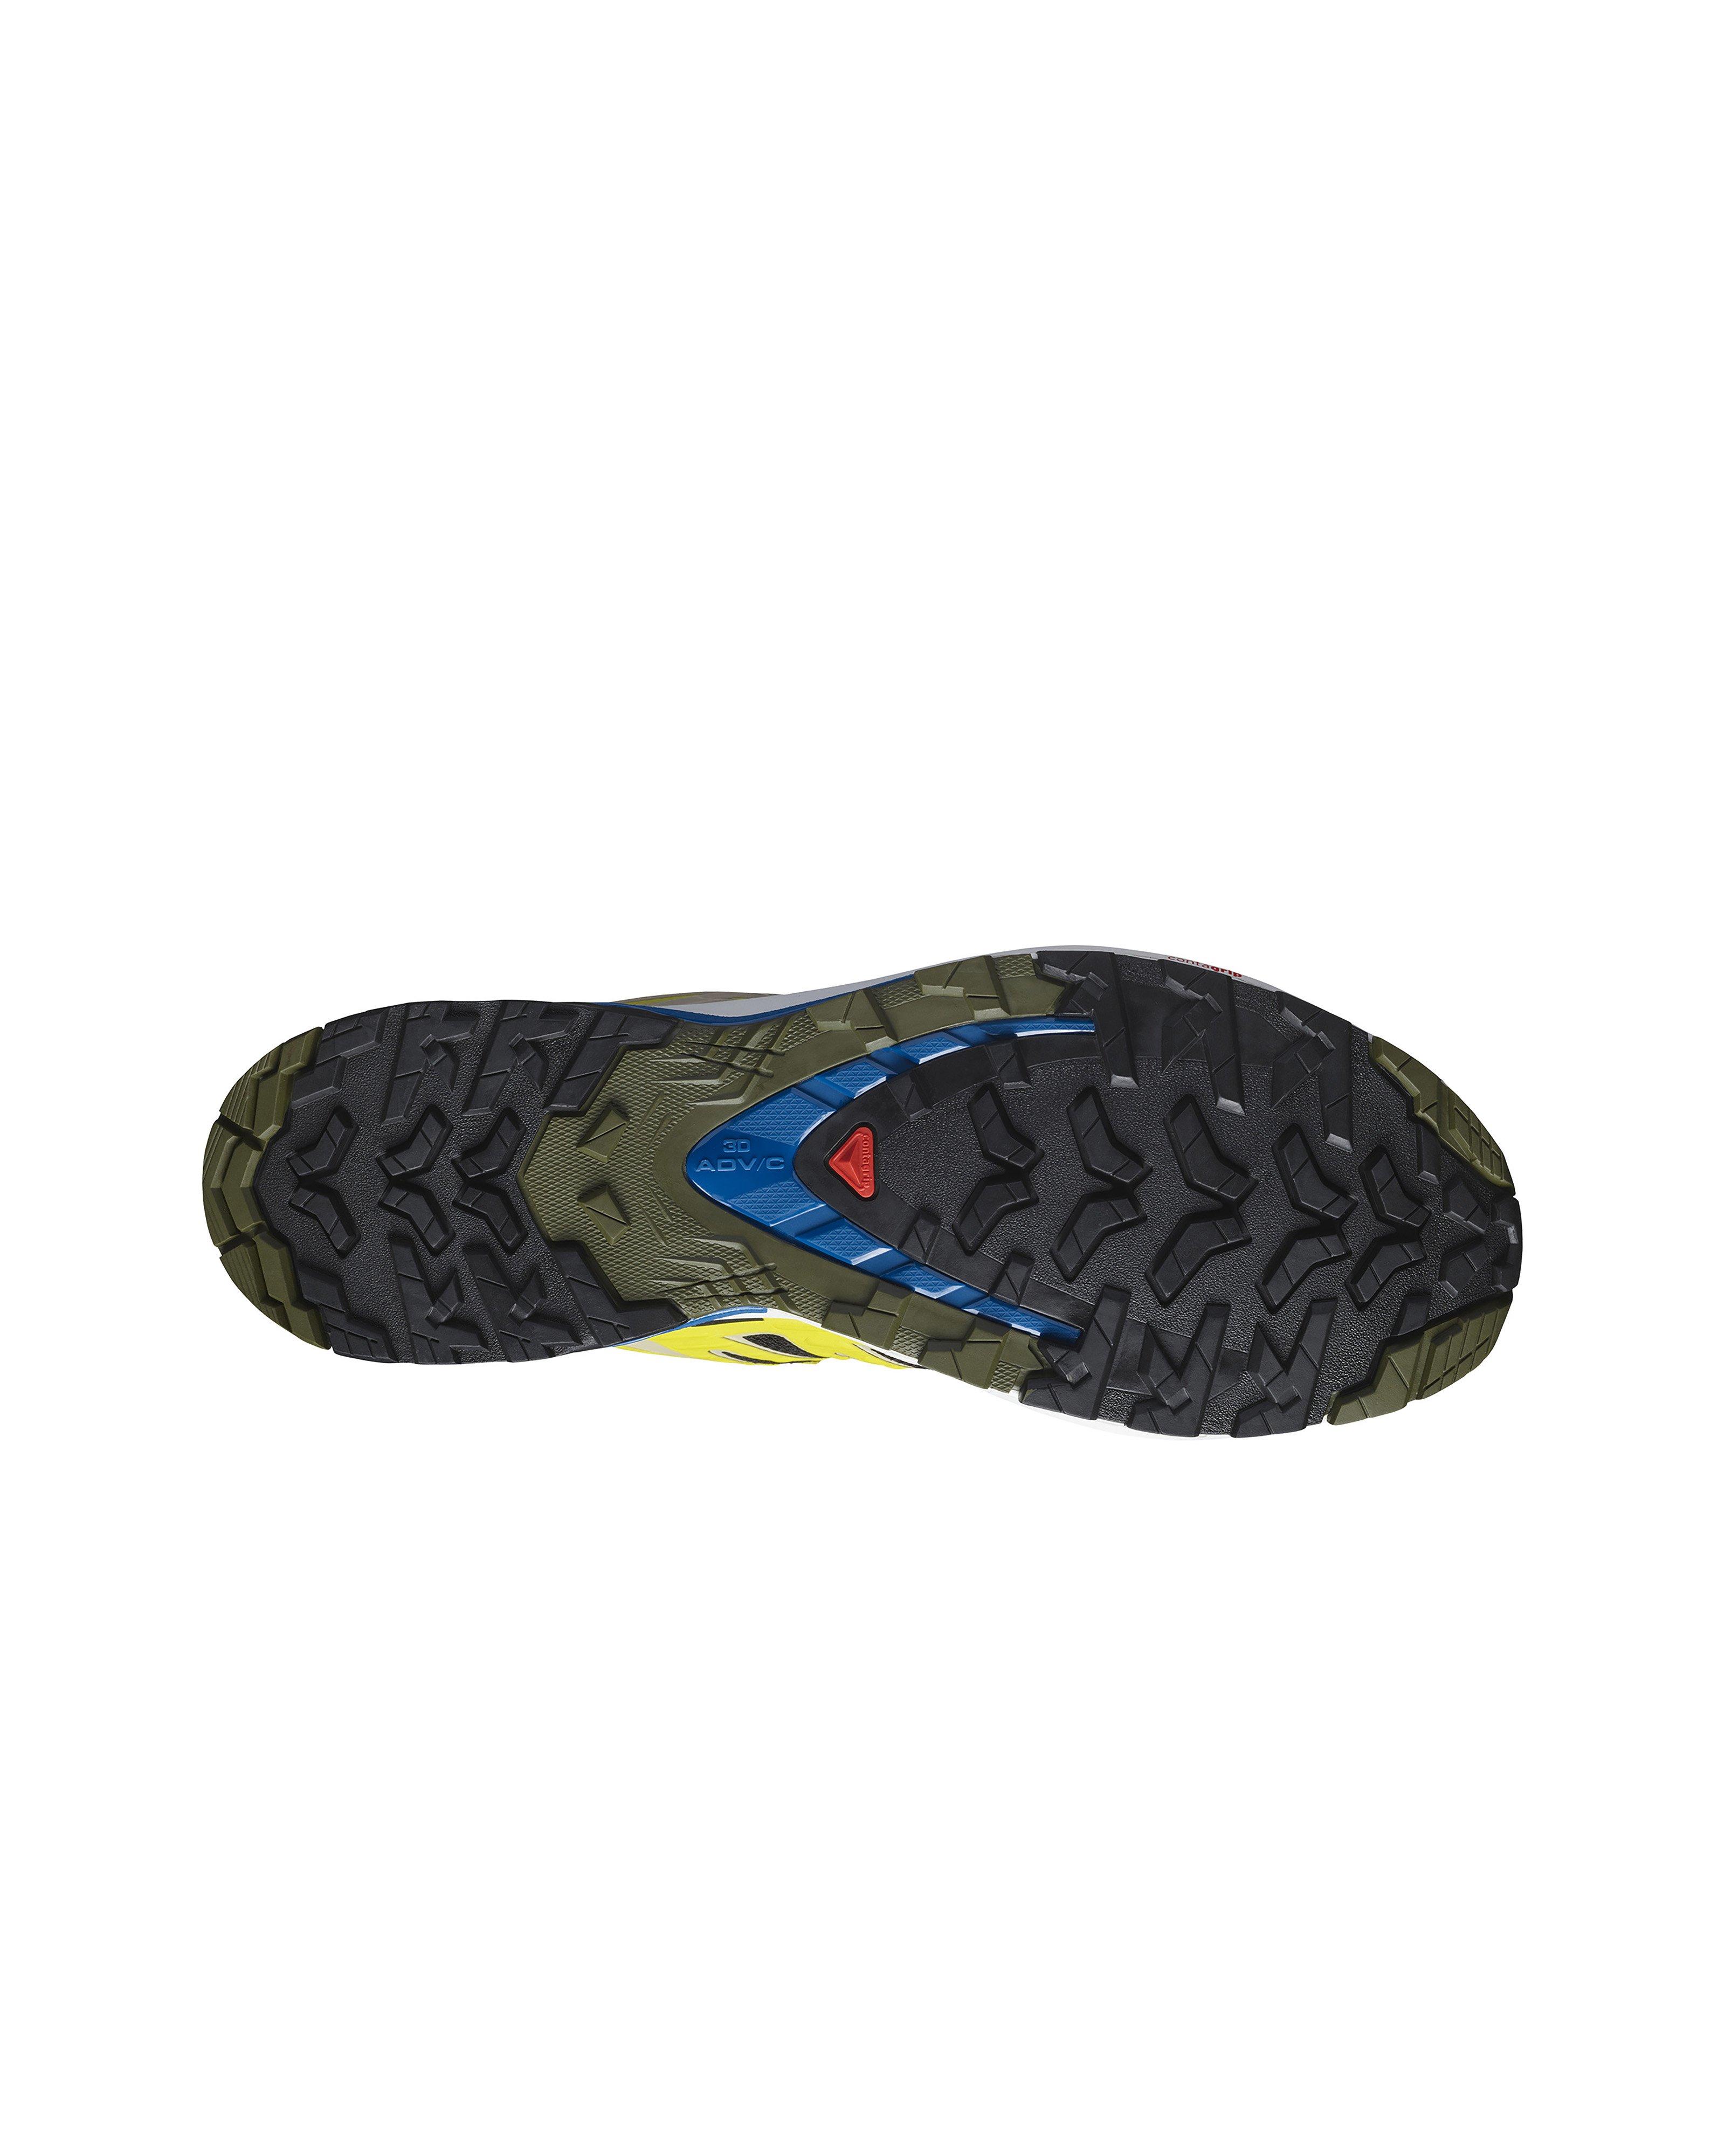 Salomon Men's XA Pro 3D V9 Gore-Tex Trail Running Shoes -  Black